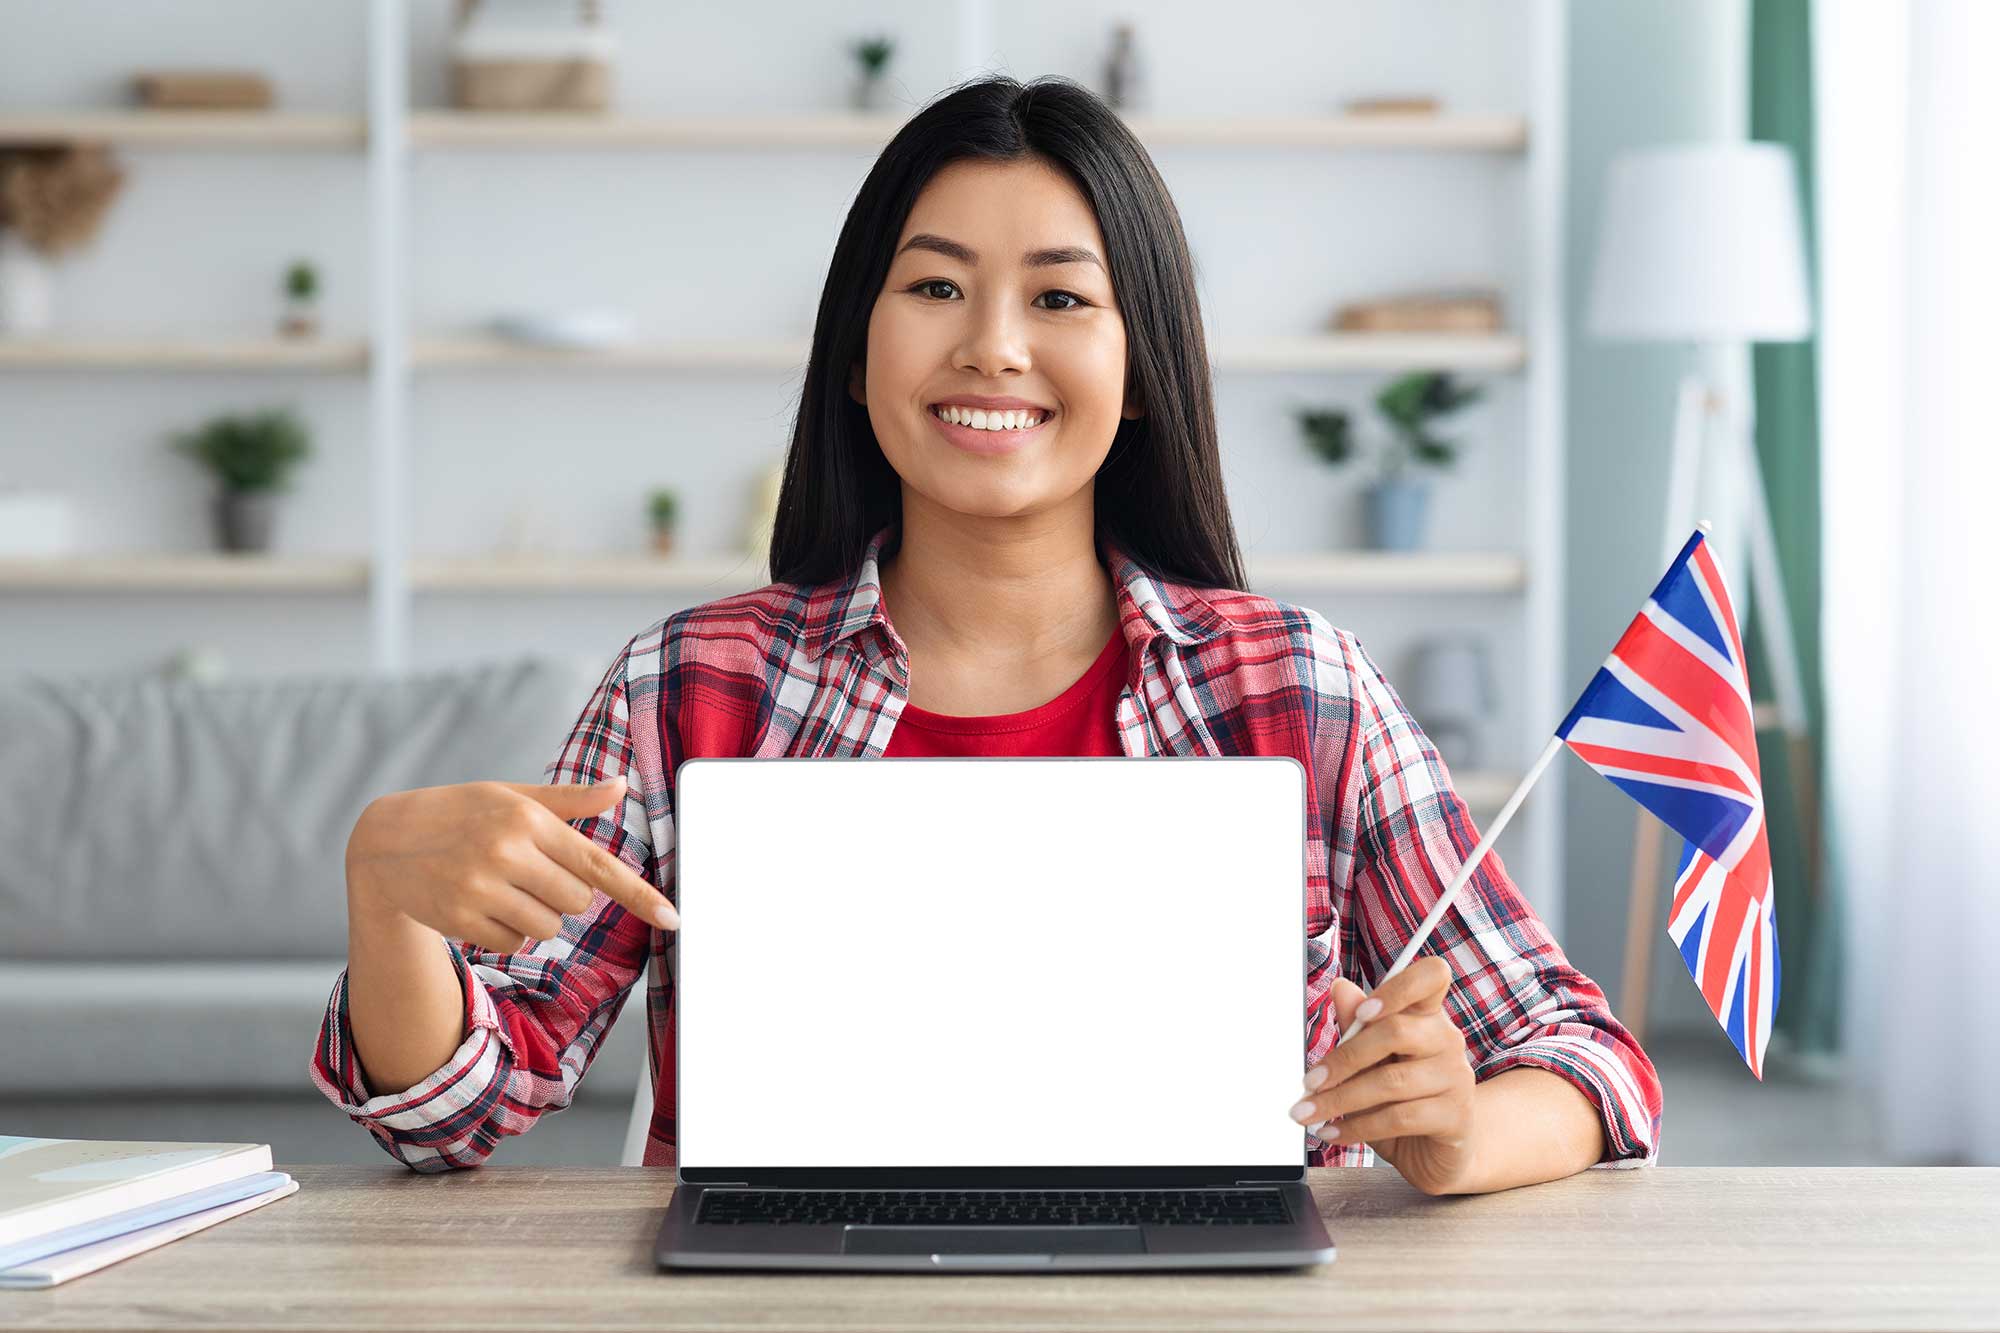 learn-english-online-asian-woman-with-british-fla-2022-12-16-07-38-43-utc.jpg